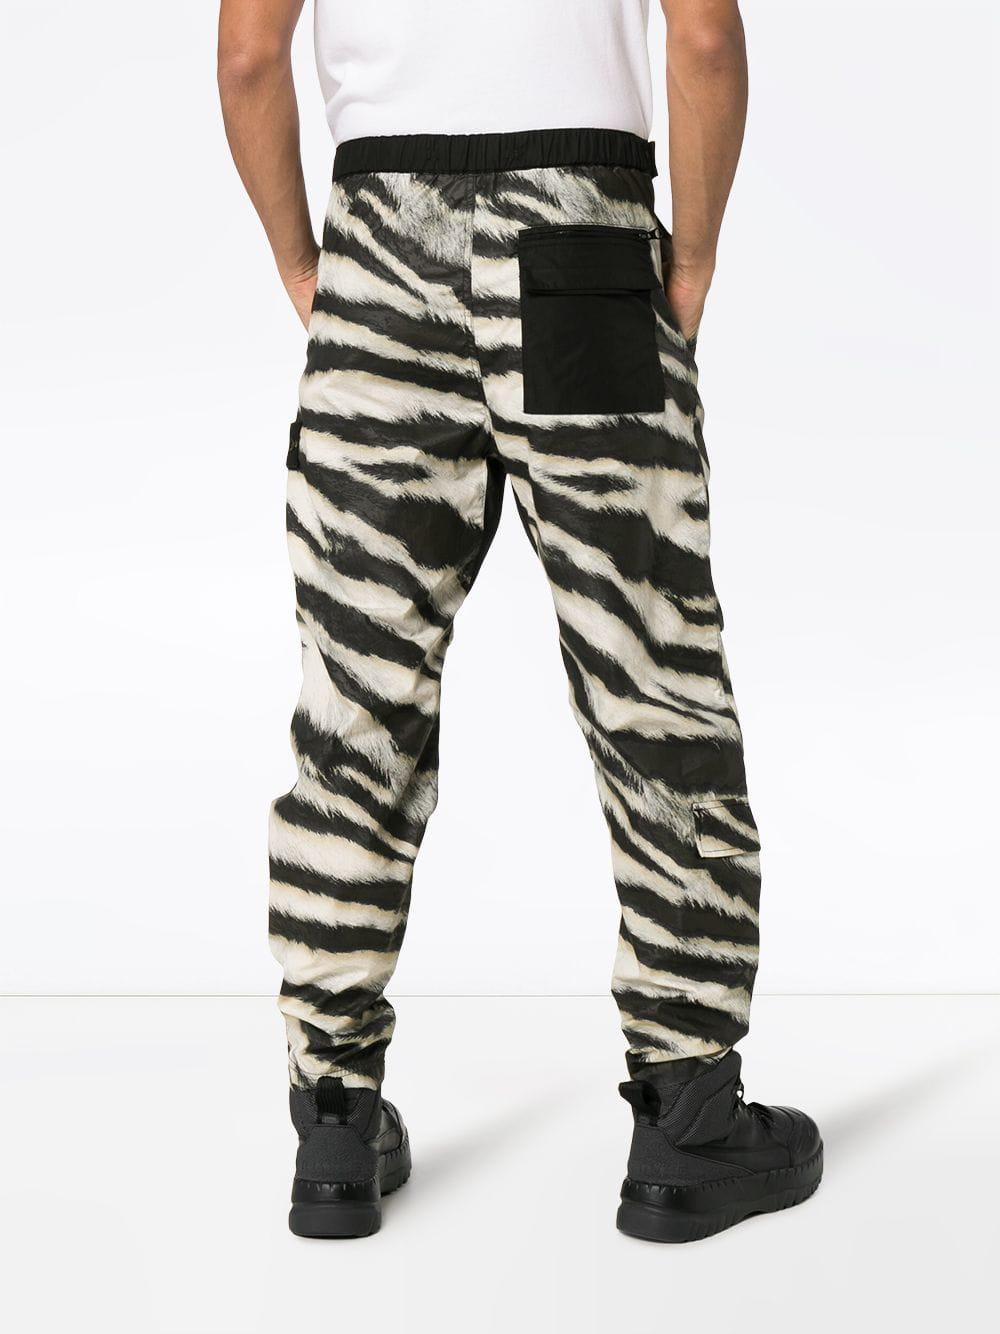 Stone Island Cotton Zebra Print Track Pants in Black for Men - Lyst